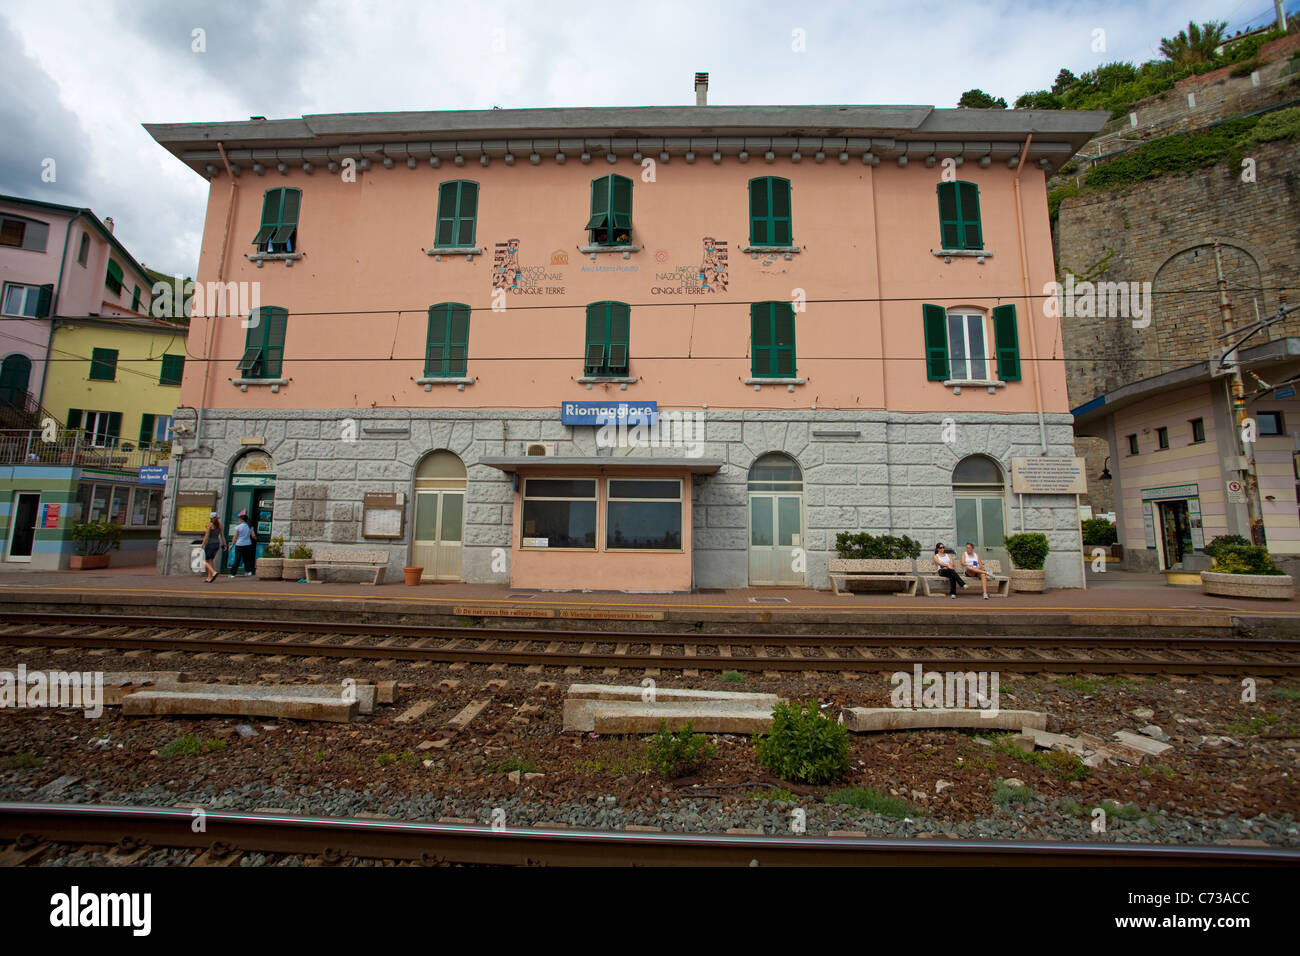 Bahnhof von Fischerdorf Riomaggiore, Nationalpark Cinque Terre, UNESCO-Weltkulturerbe, Ligurien di Levante, Italien, Mittelmeer Stockfoto